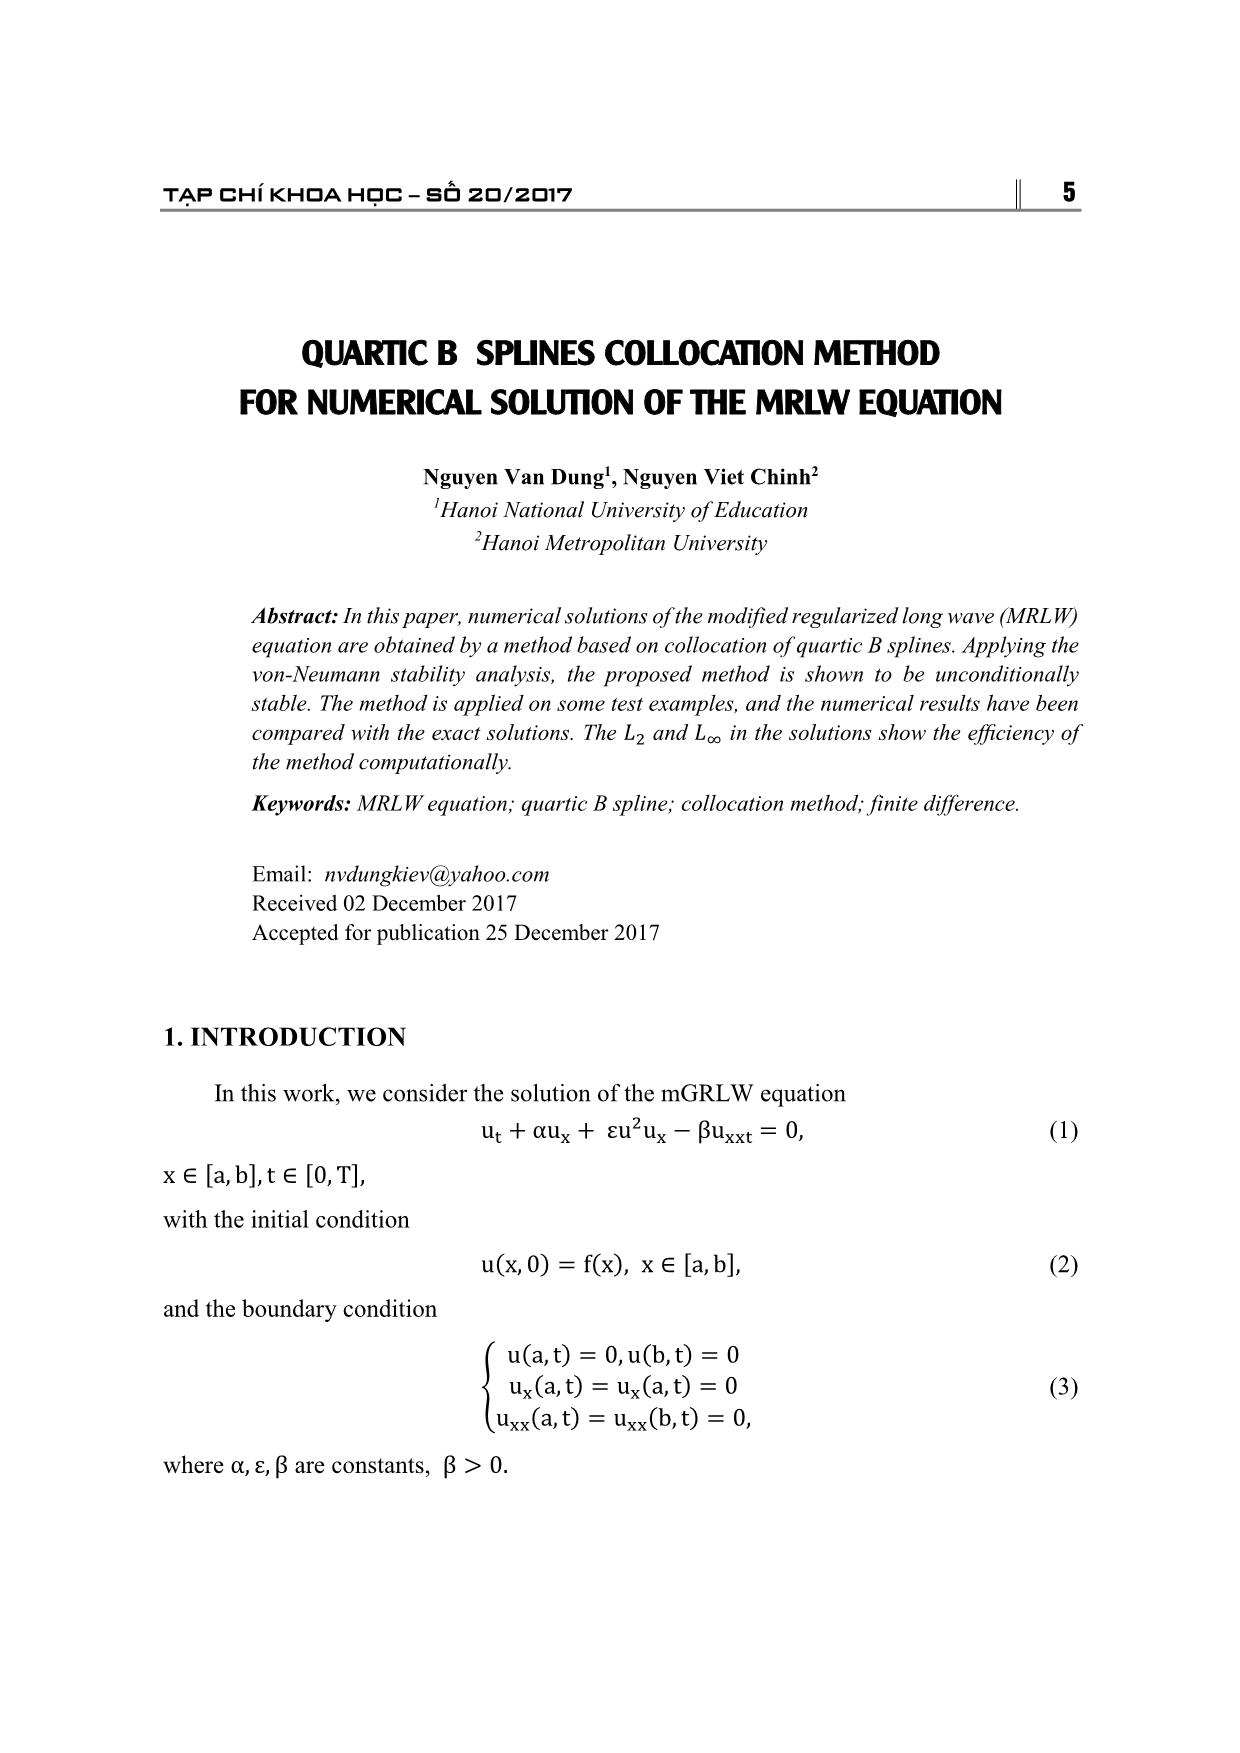 Quartic B splines collocation method for numerical solution of the MRLW equation trang 1